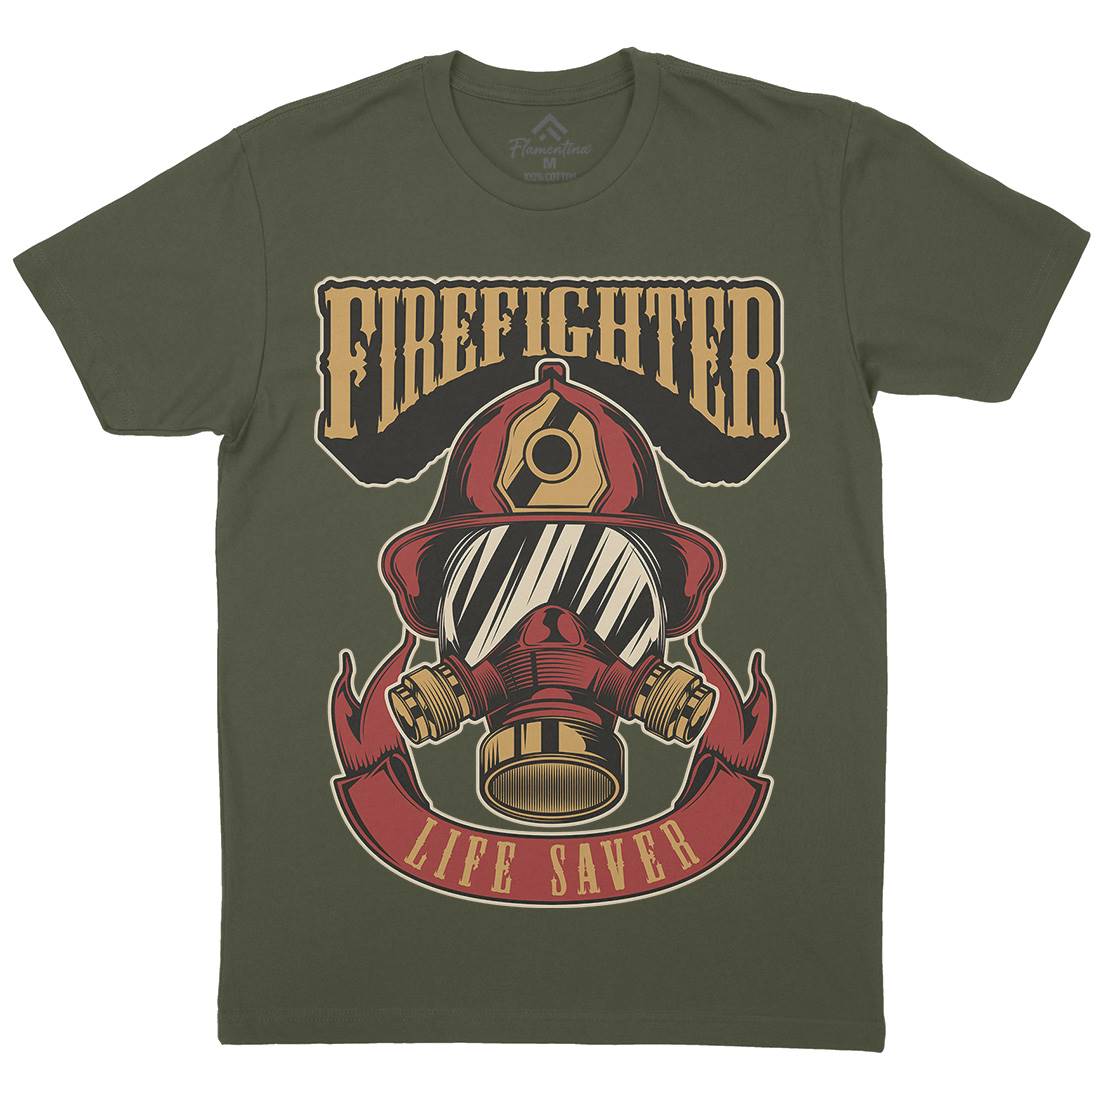 Life Saver Mens Crew Neck T-Shirt Firefighters C827